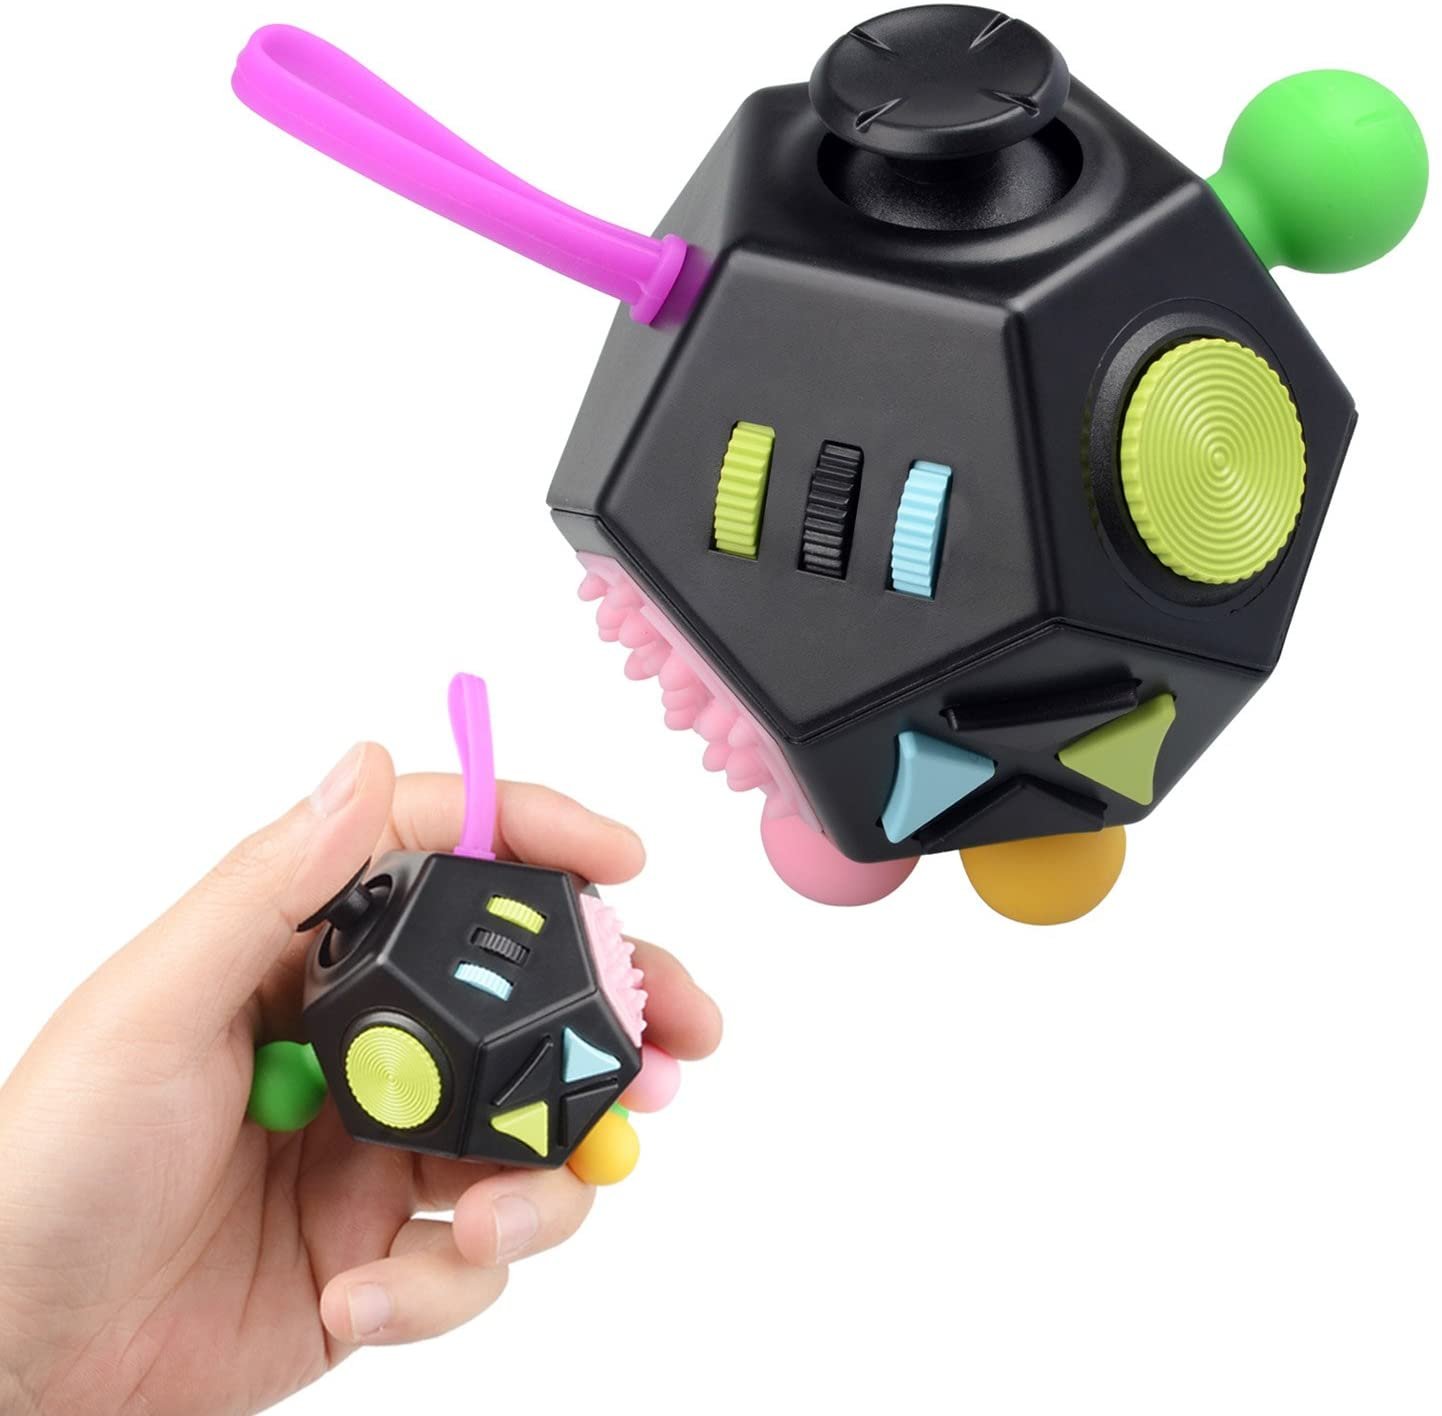 juguete de estrés para aliviar el cansancio de la lanxiedad Fidget Sensory Toy juguete antiestrés para niños y adultos Juguete antiestrés para piñas TDAH 